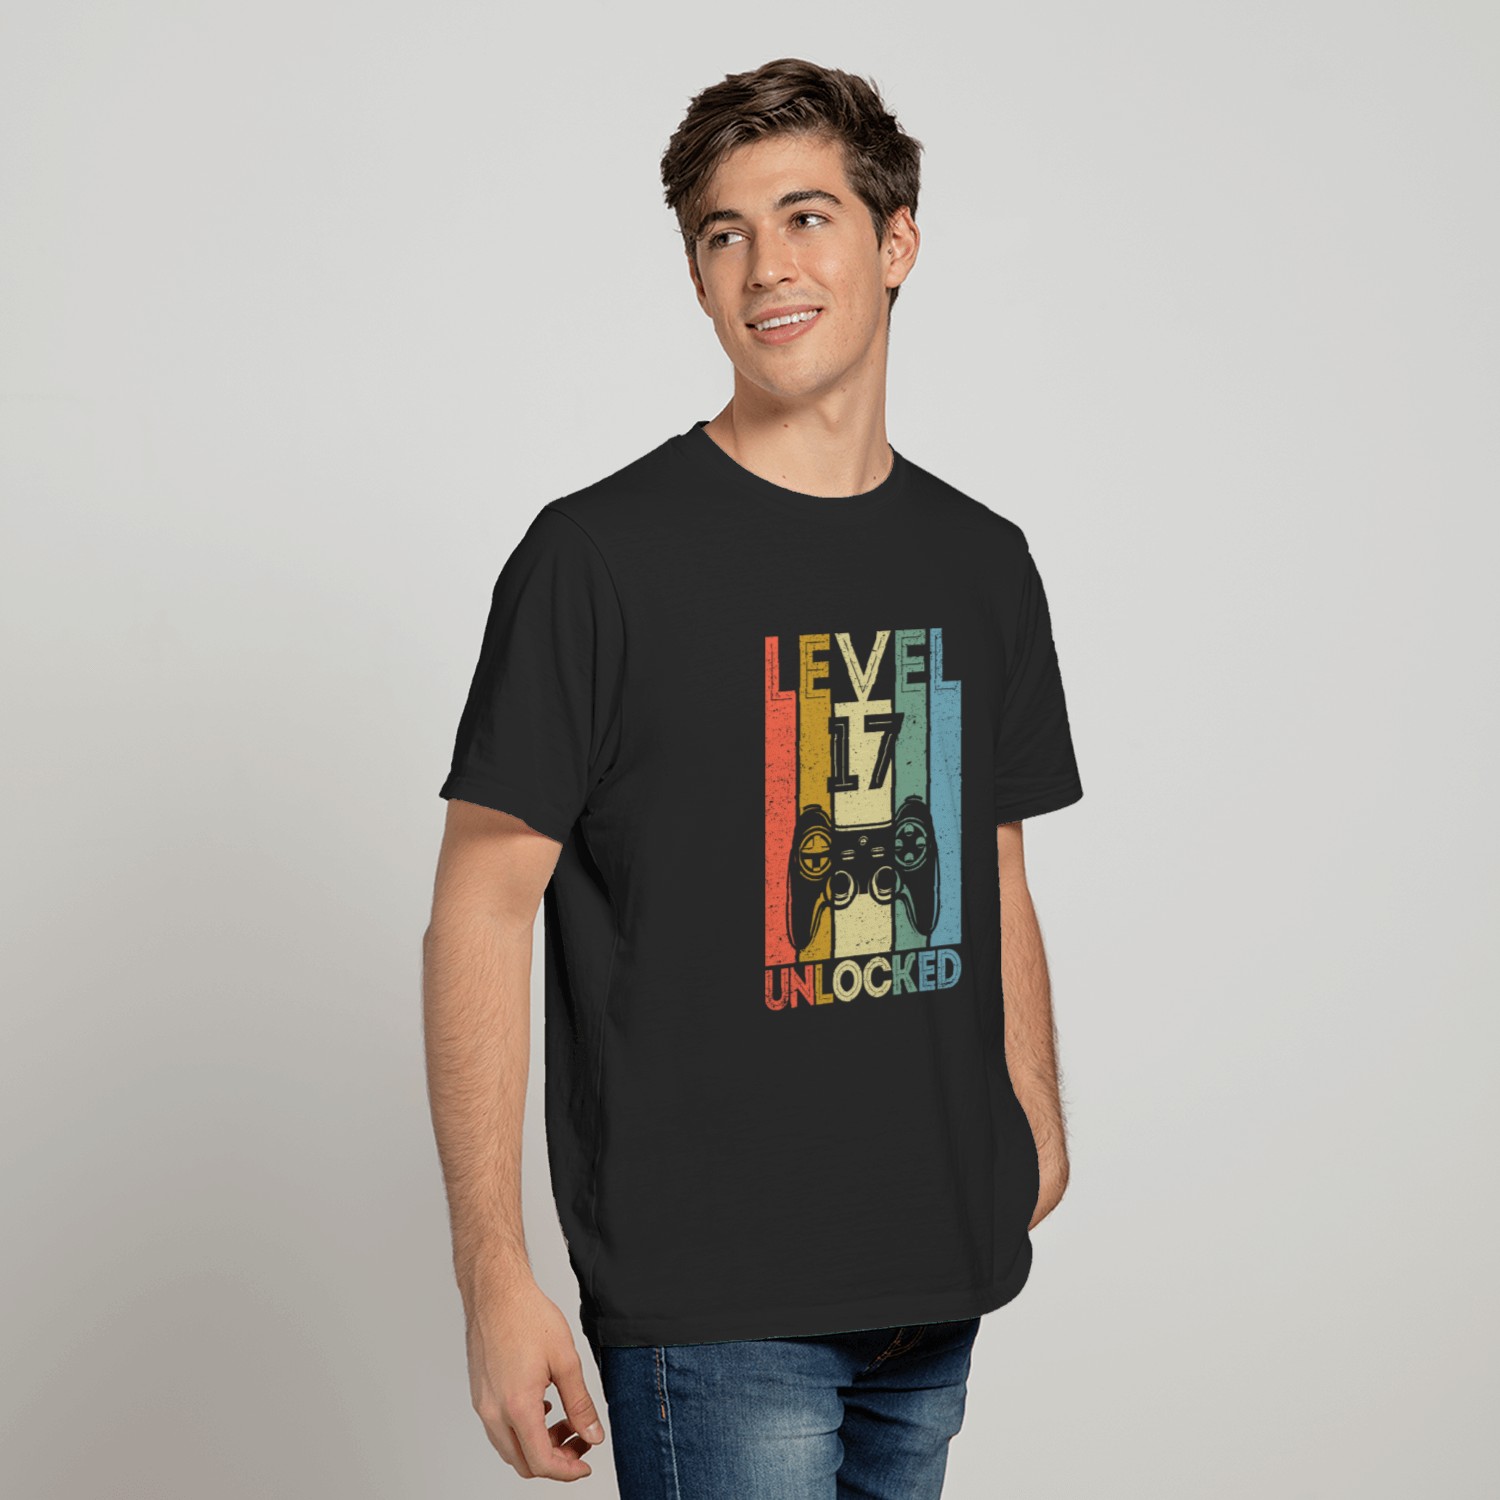 Level 17 Unlocked Shirt Funny Video Gamer 17th Birthday Gift T-Shirt